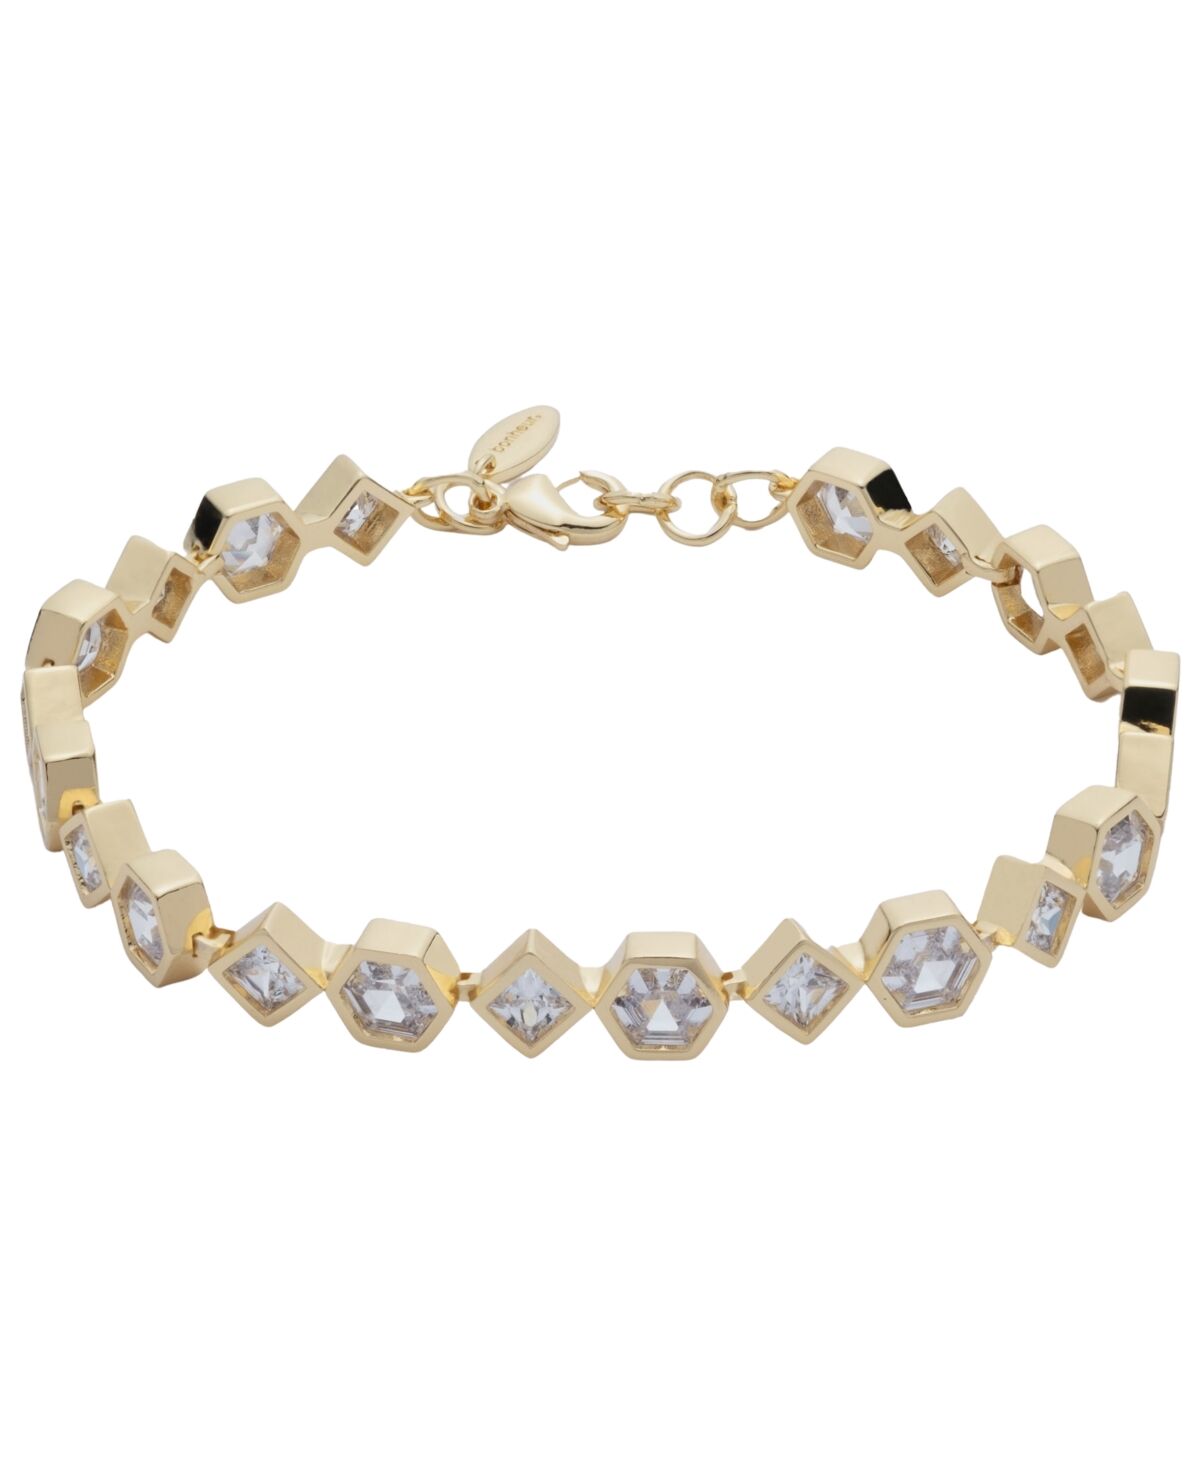 Bonheur Jewelry Milou Bezel Set Crystal Bracelet - Karat Gold Plated Brass